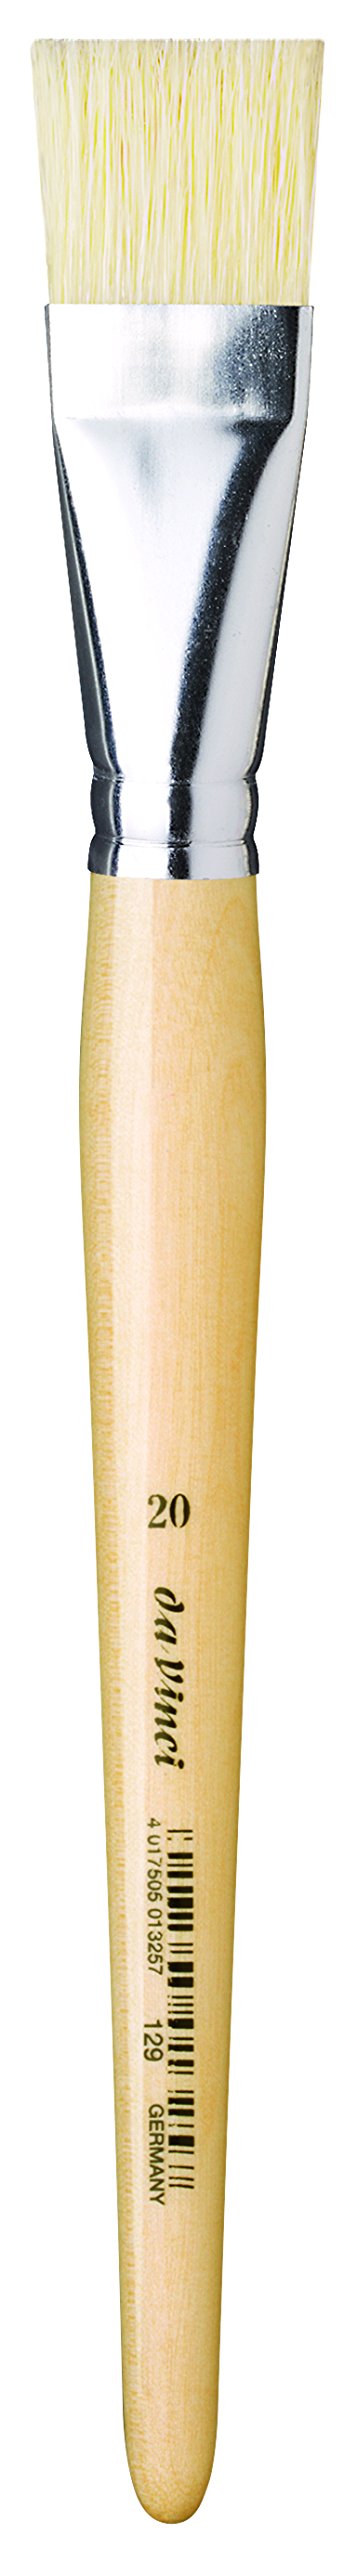 Pennelli Da Vinci Junior borste punta piatta setola sintetica n.20